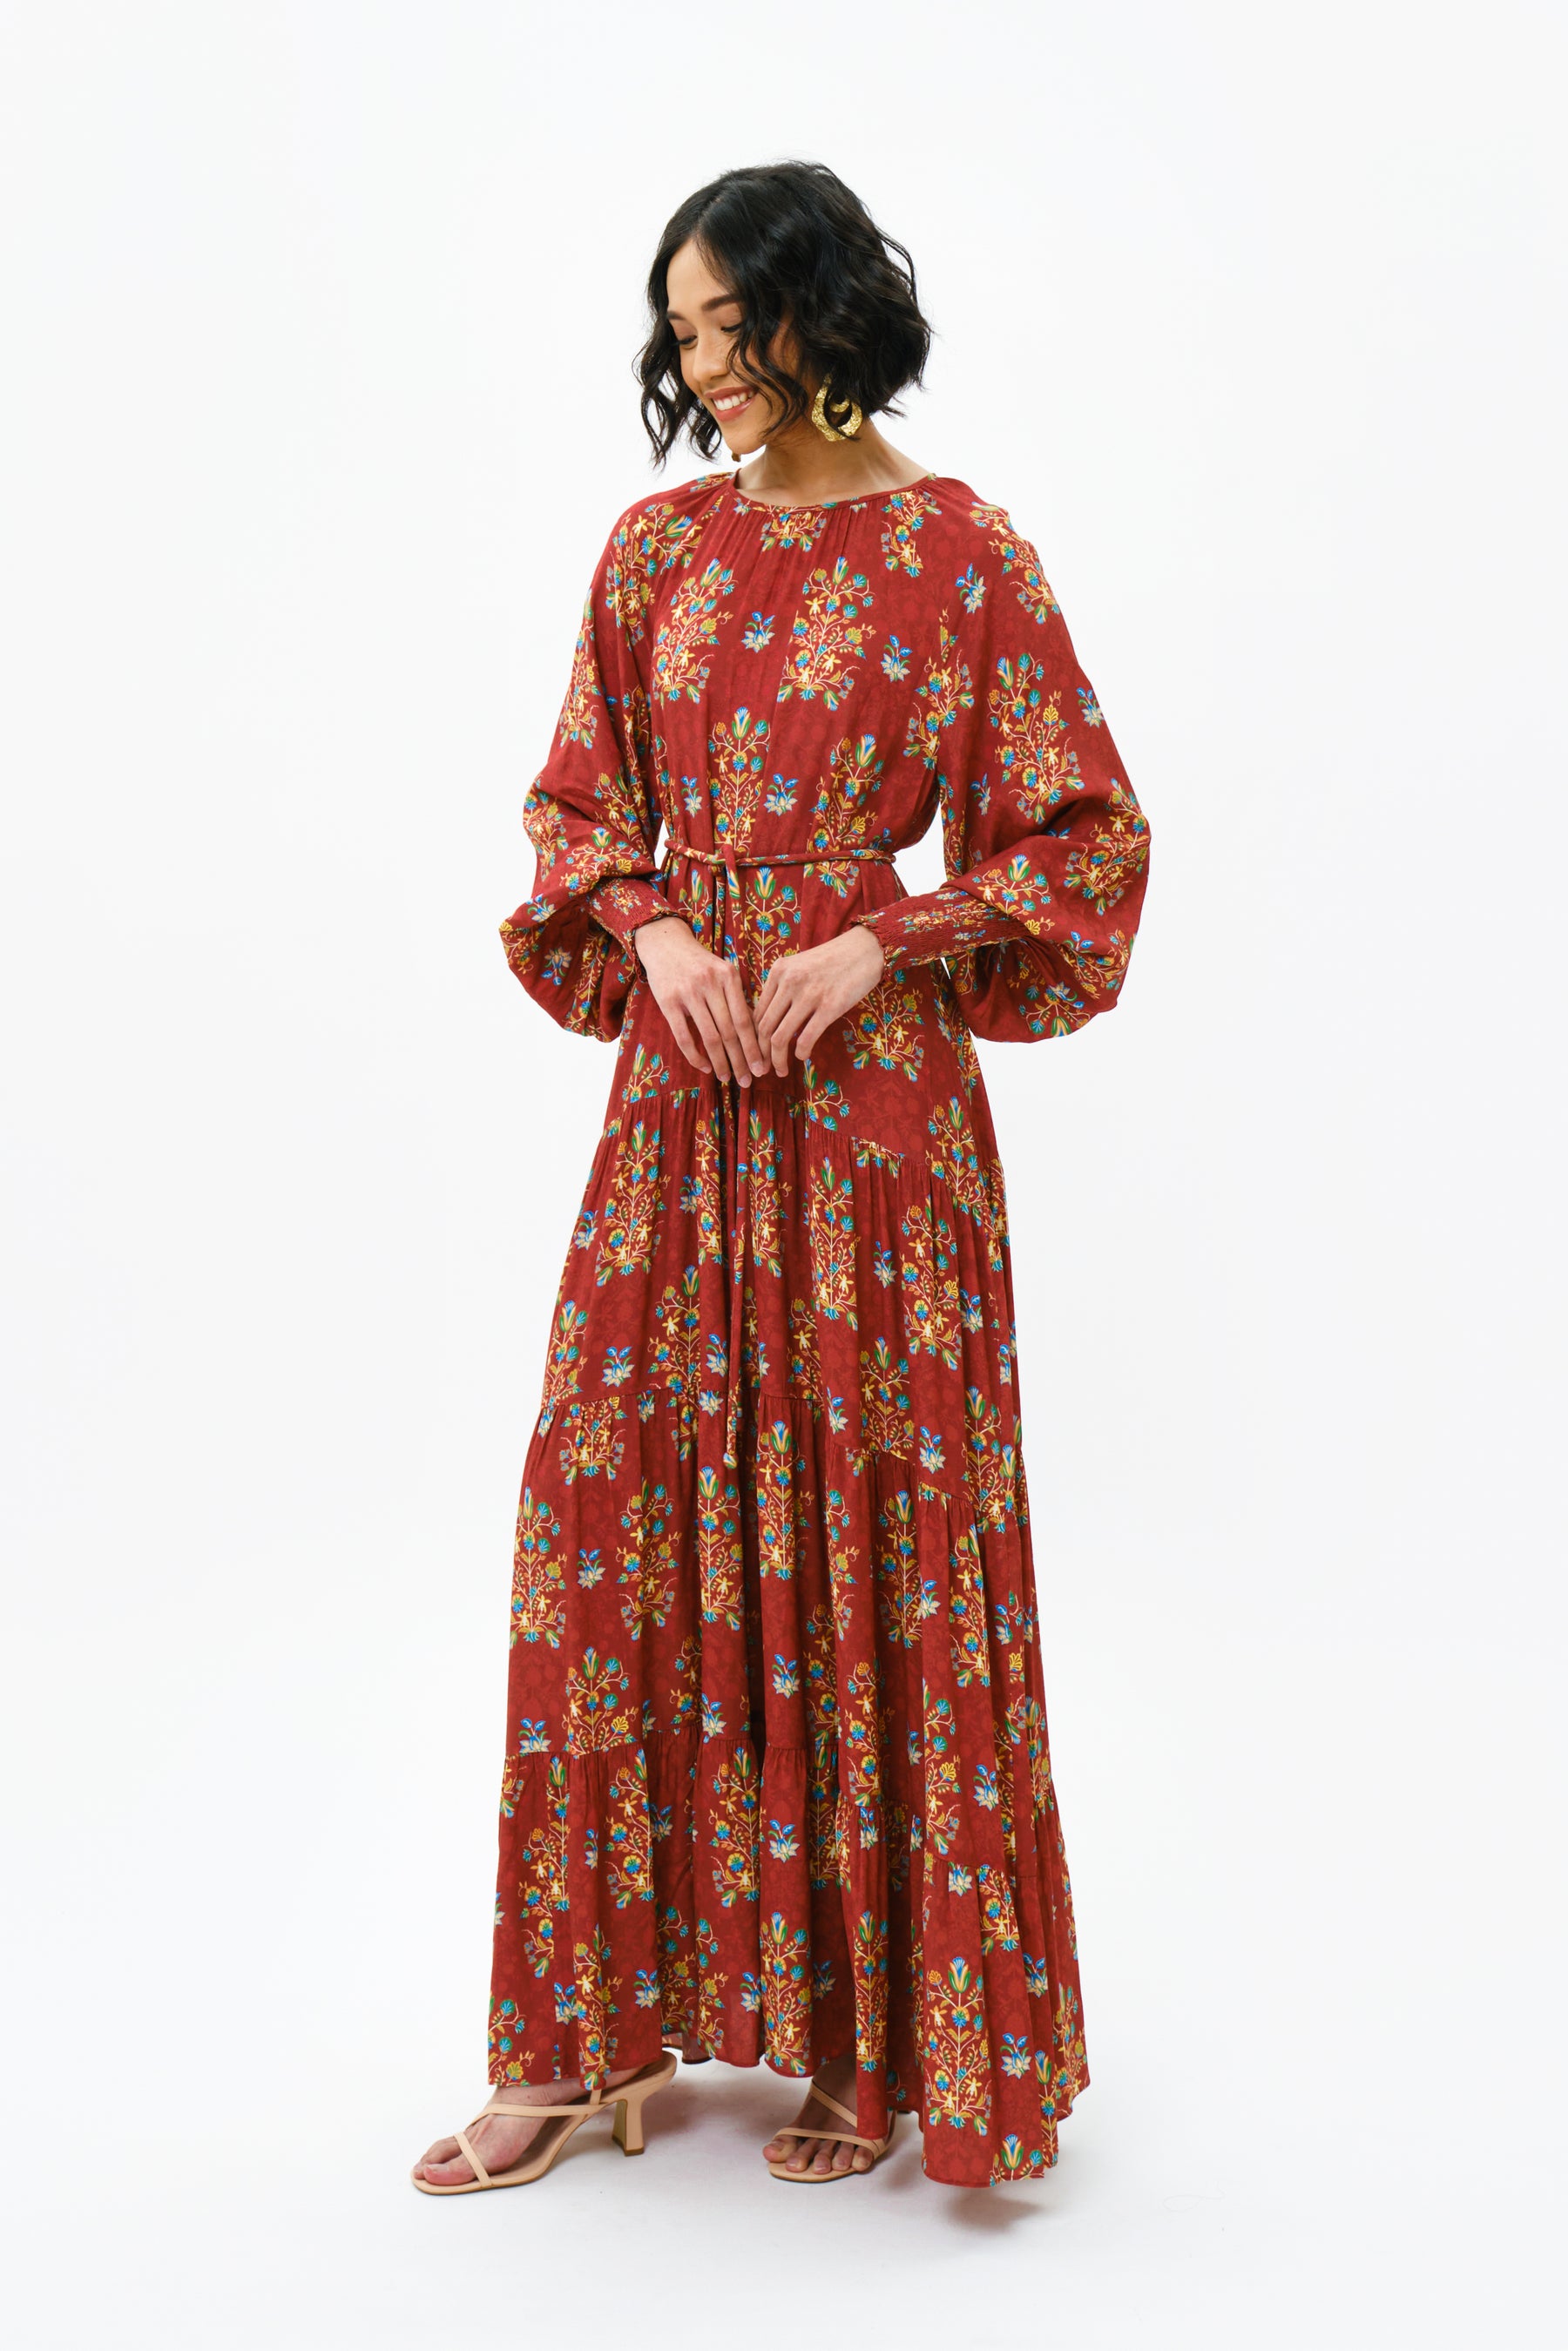 ARUNI Dress in Red Anggrek